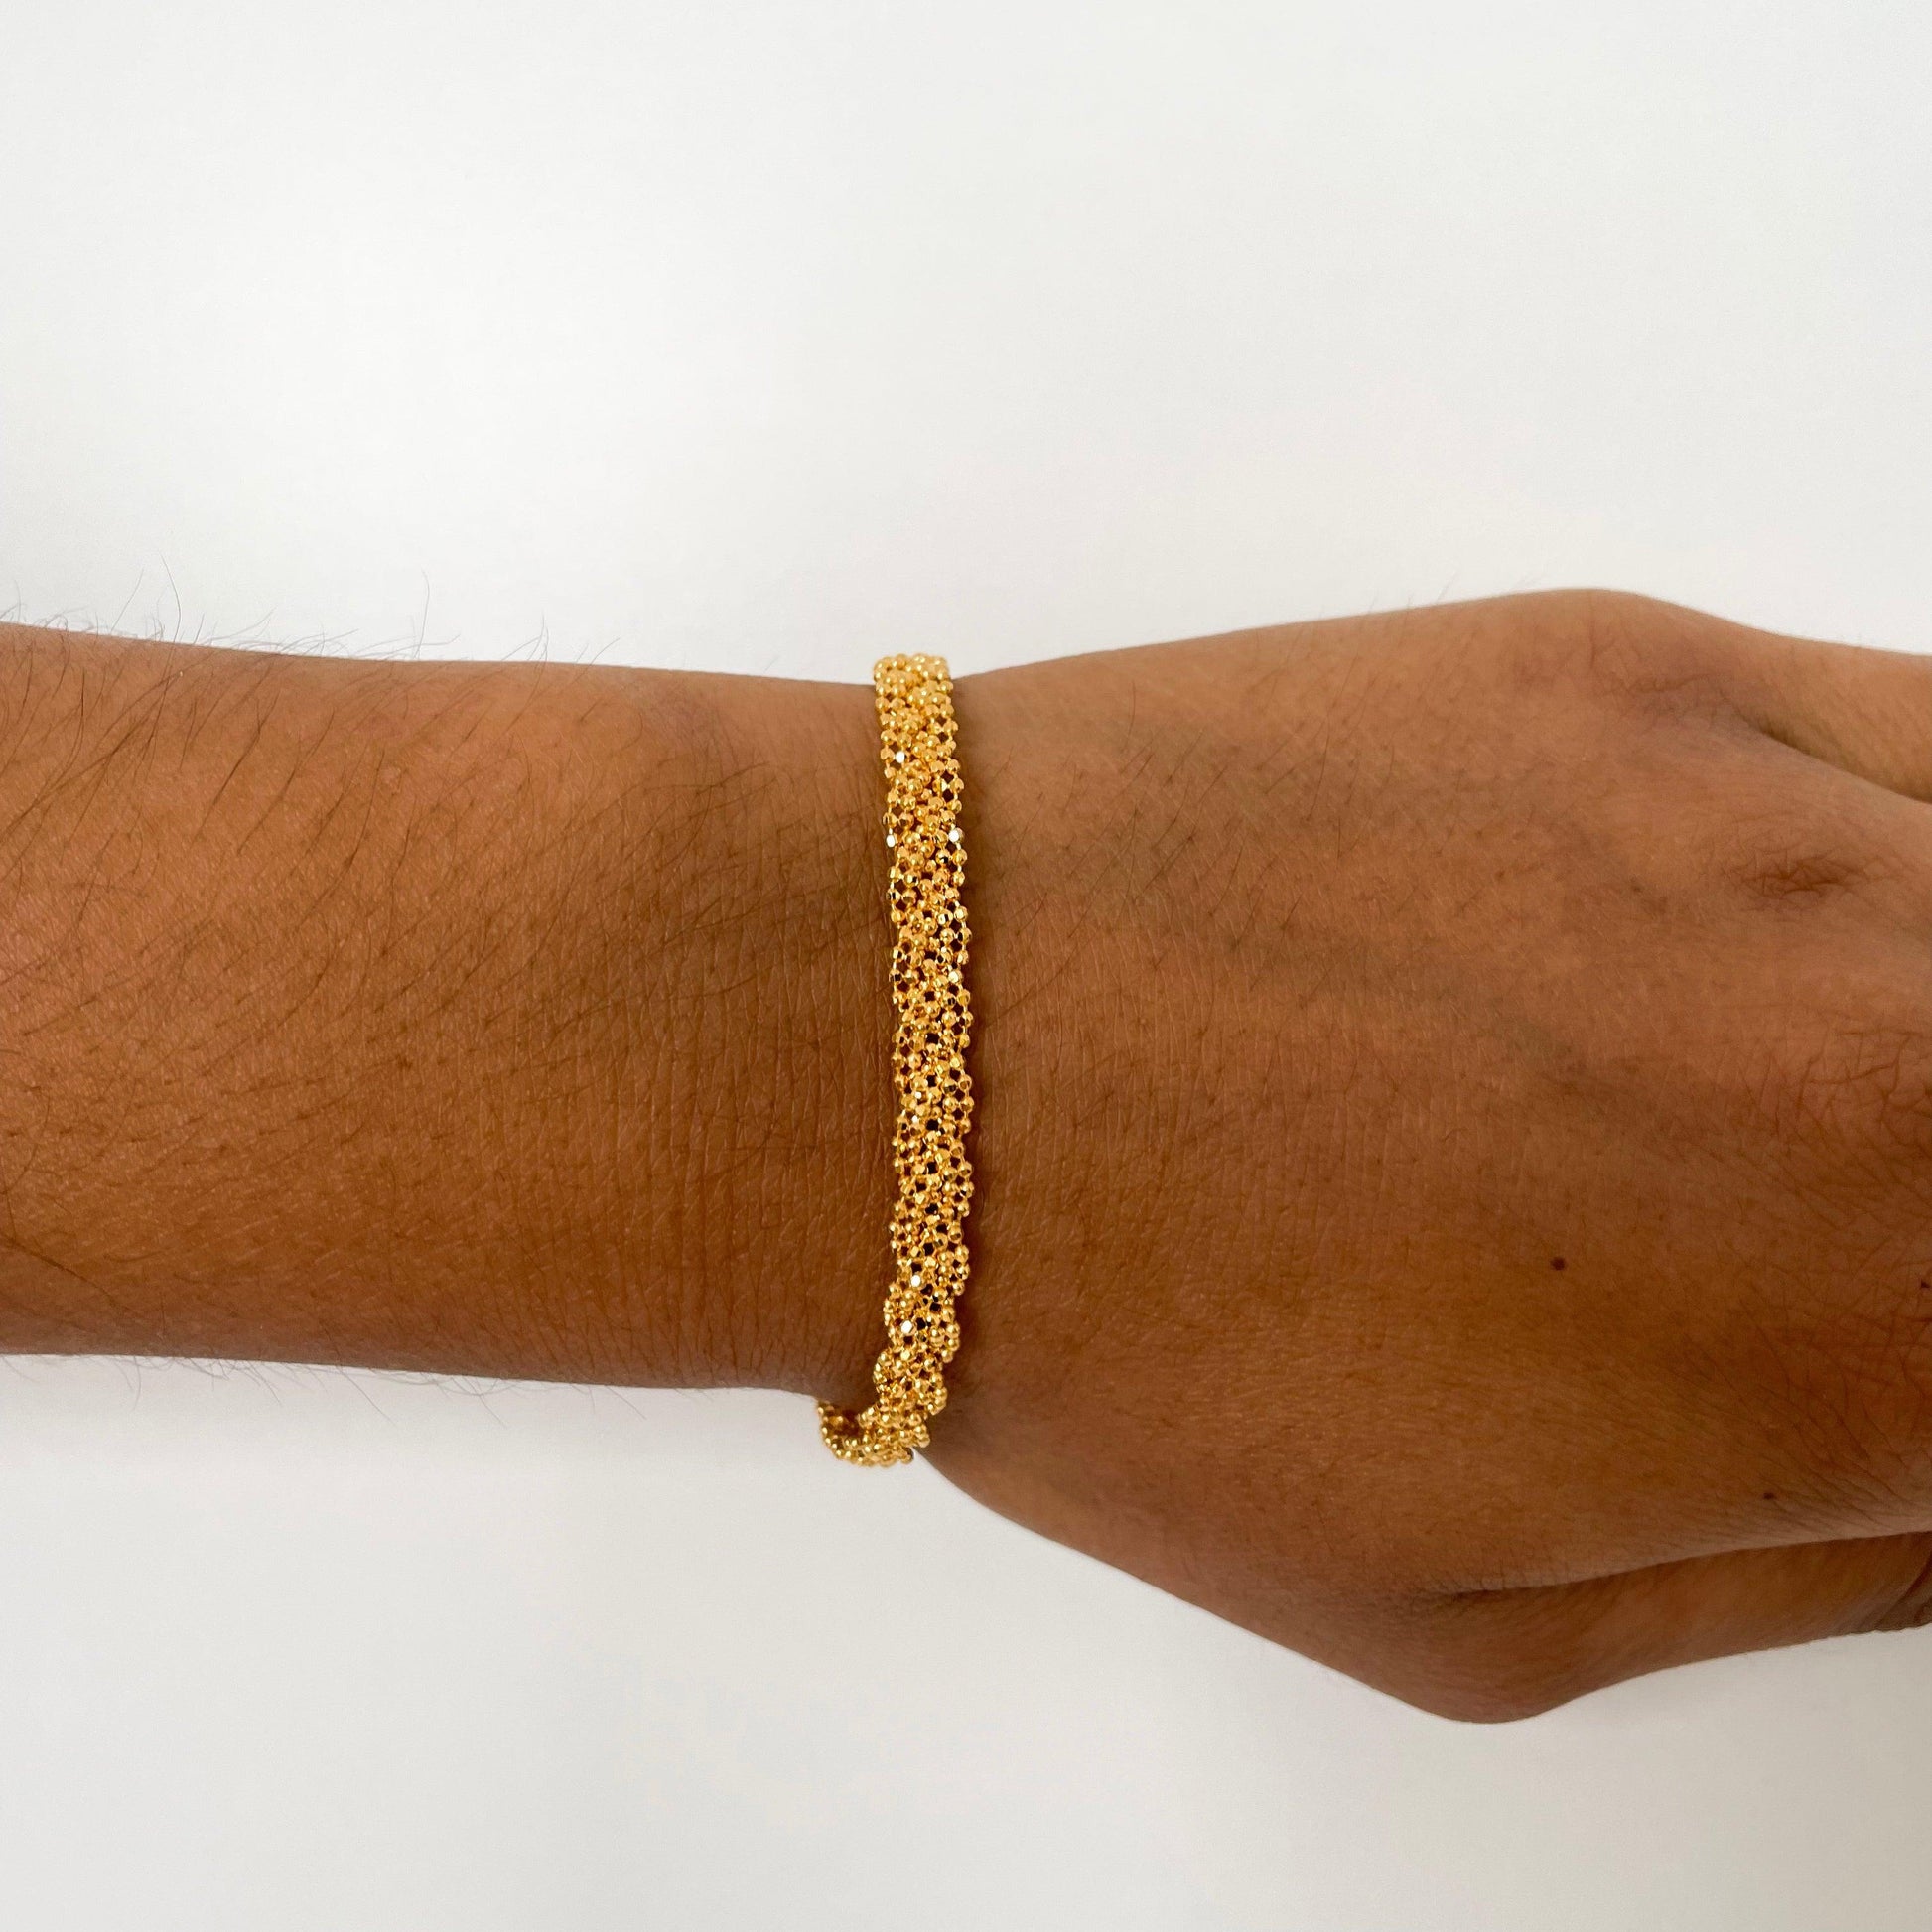 22ct Gold Ribbon Style Bracelet LBR-2820 - Minar Jewellers